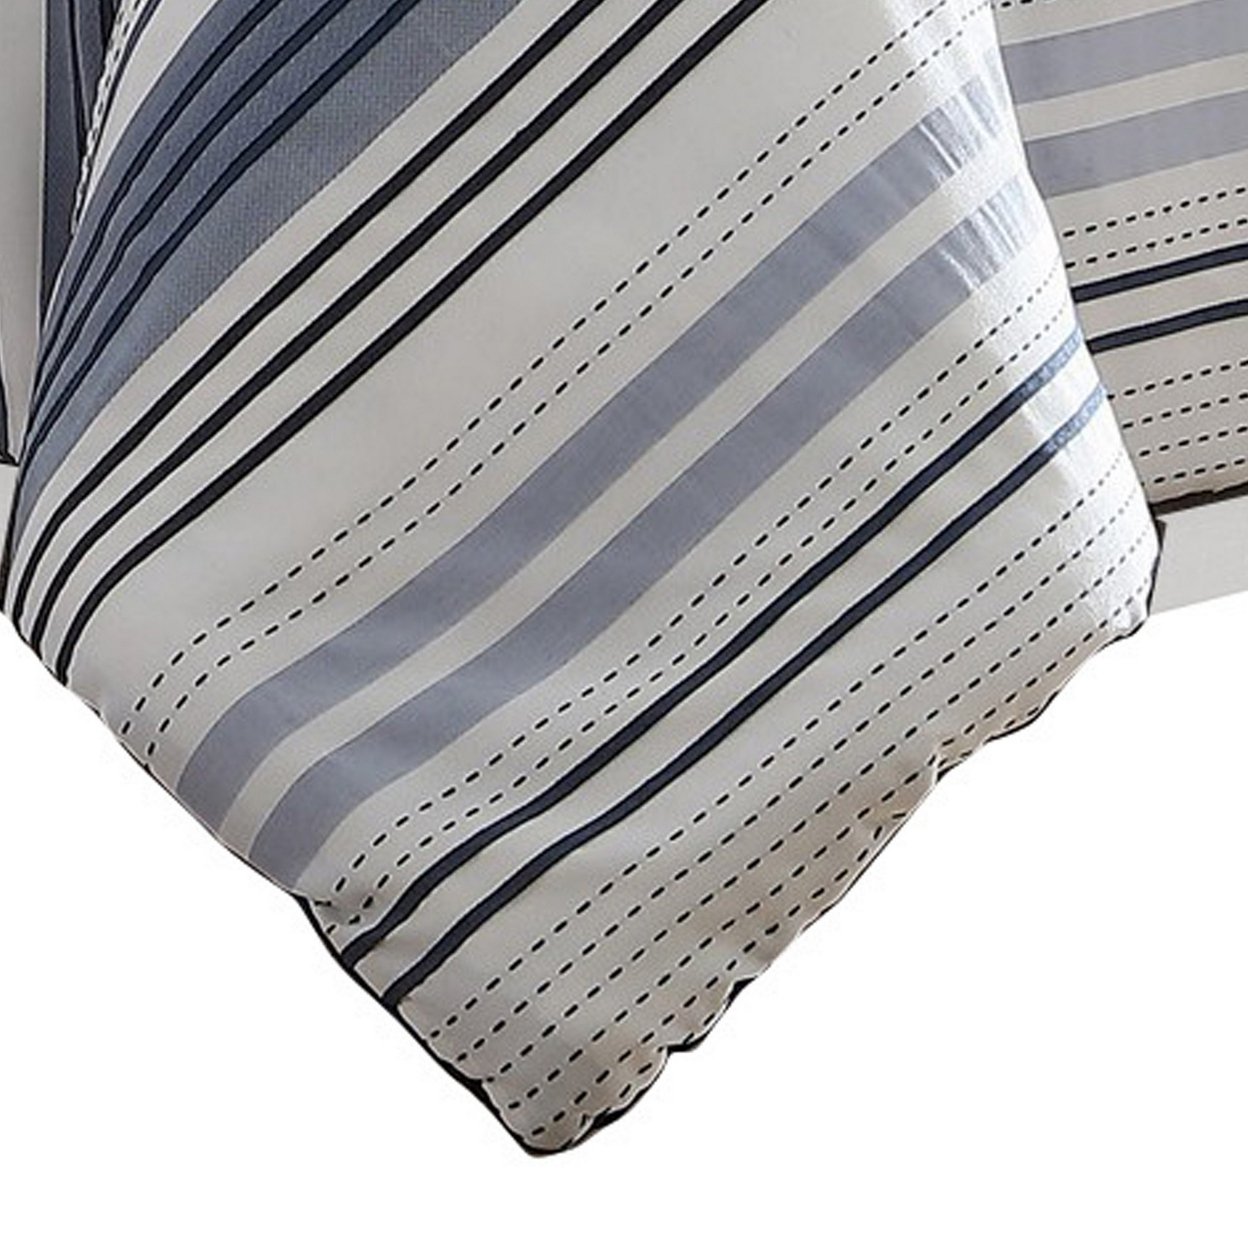 Alfa 5 Piece Queen Comforter Set, Jacquard Woven Stripes, Blue, White - Saltoro Sherpi